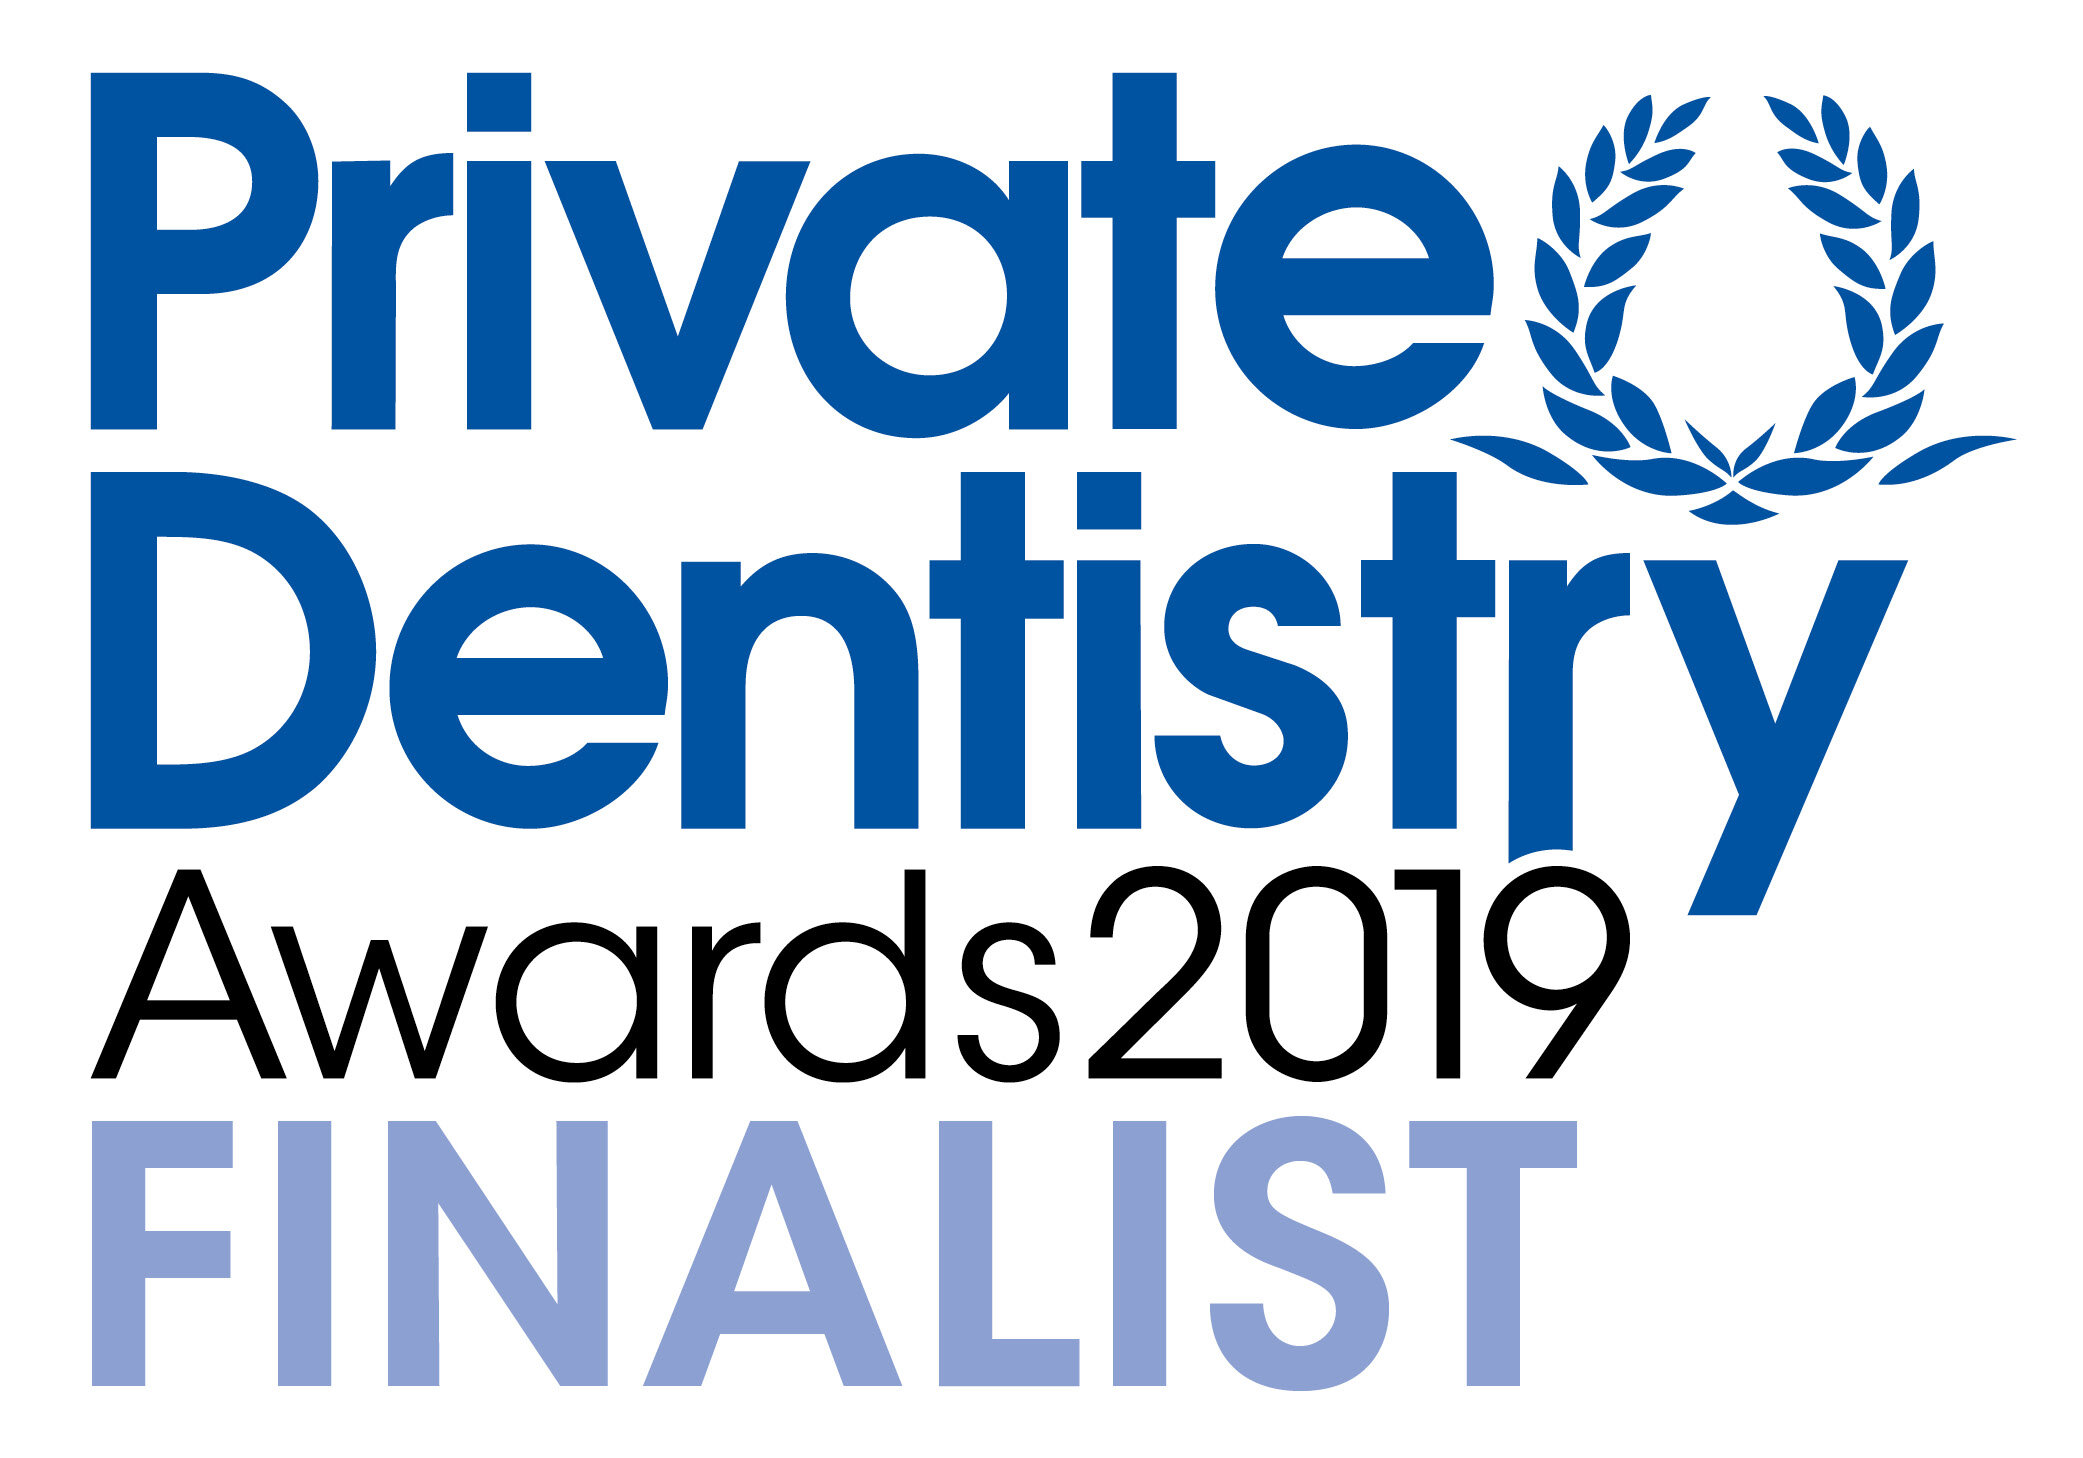 Private-Dentistry-Awards-2019-Finalist.jpg